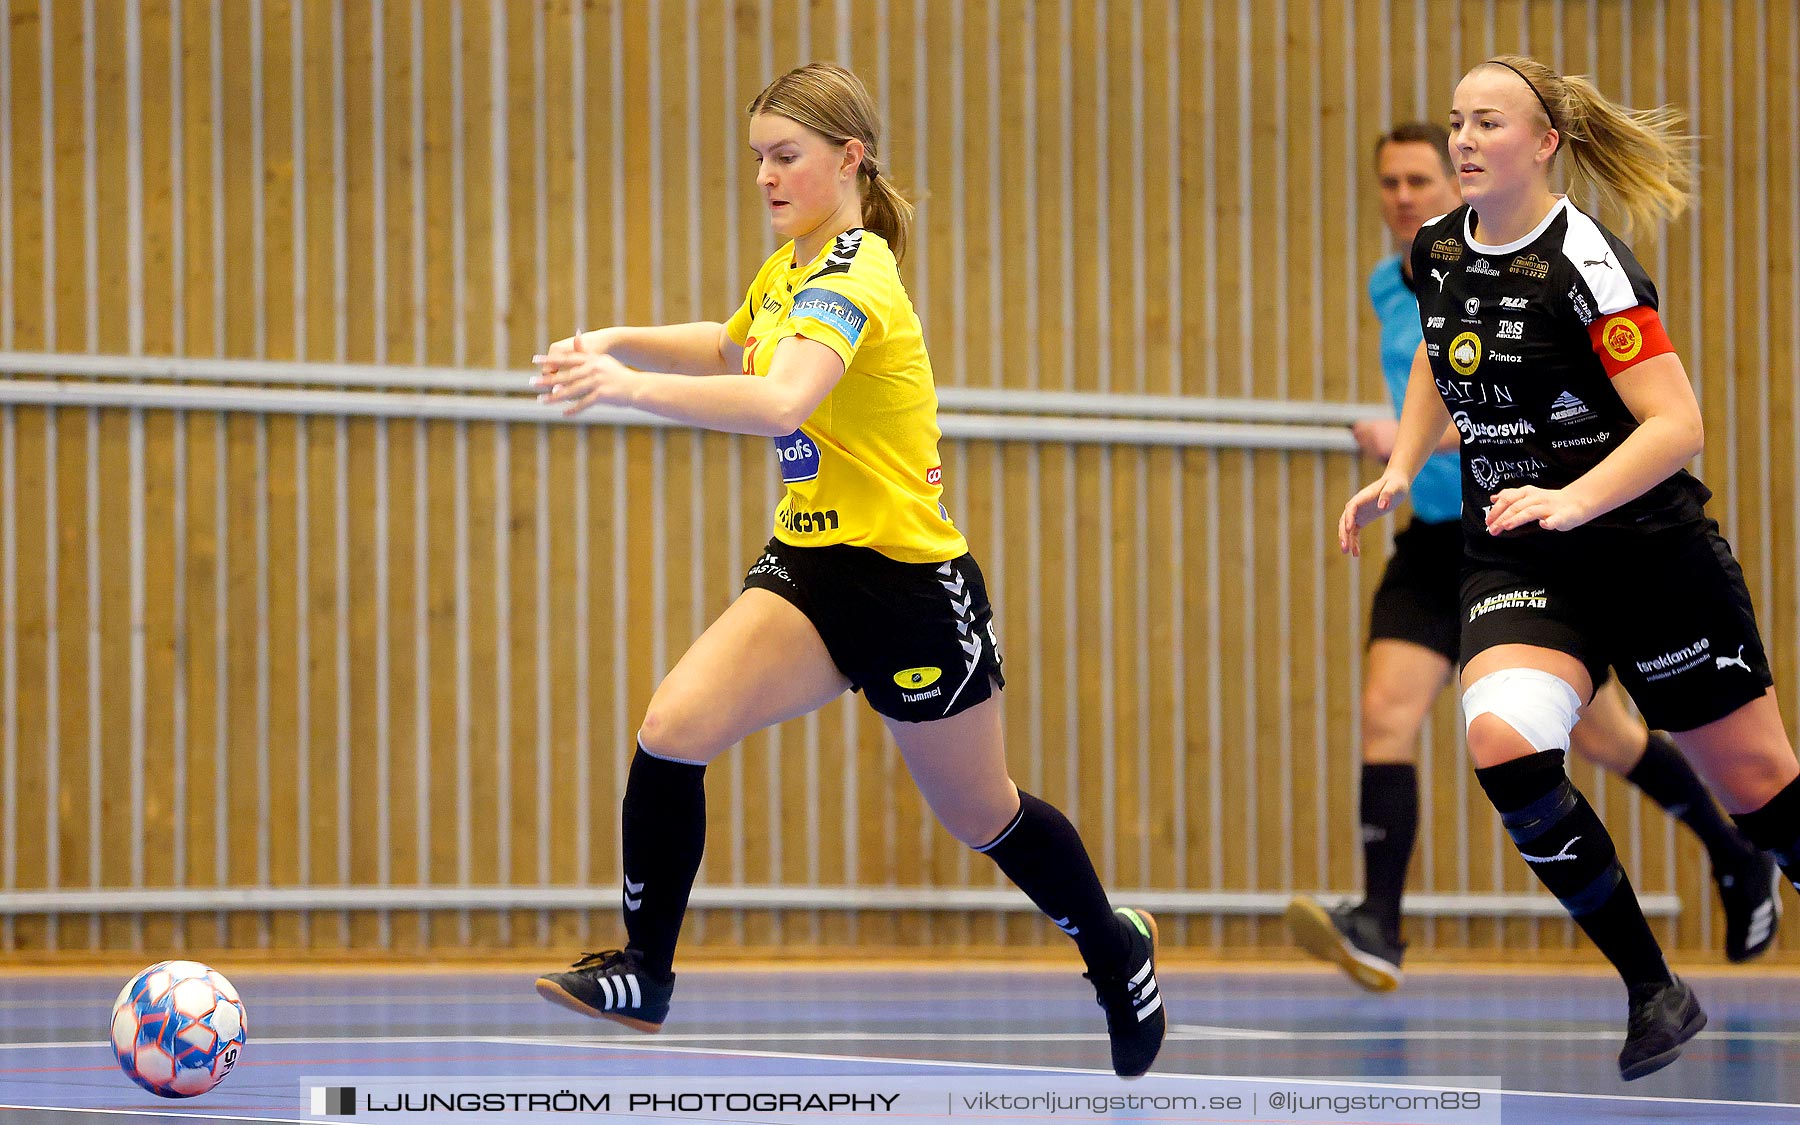 Skövde Futsalcup 2021 Damer Örebro Futsal Club-Skultorps IF 2,dam,Arena Skövde,Skövde,Sverige,Futsal,,2021,270493